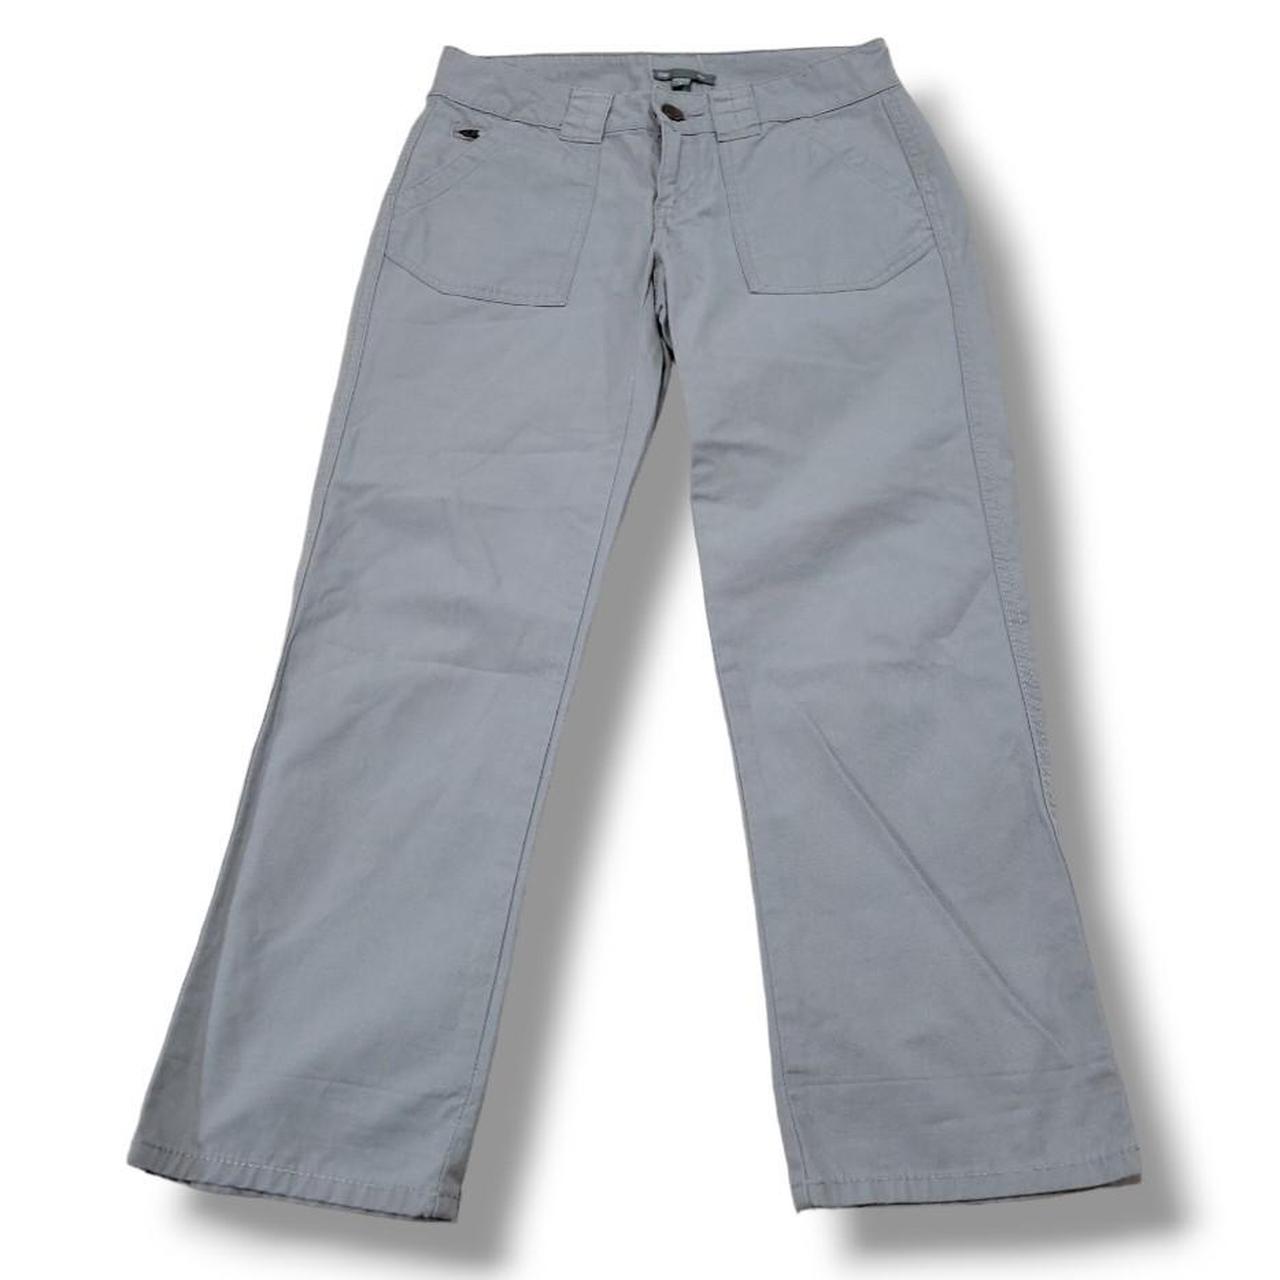 Gray Capris Pants 